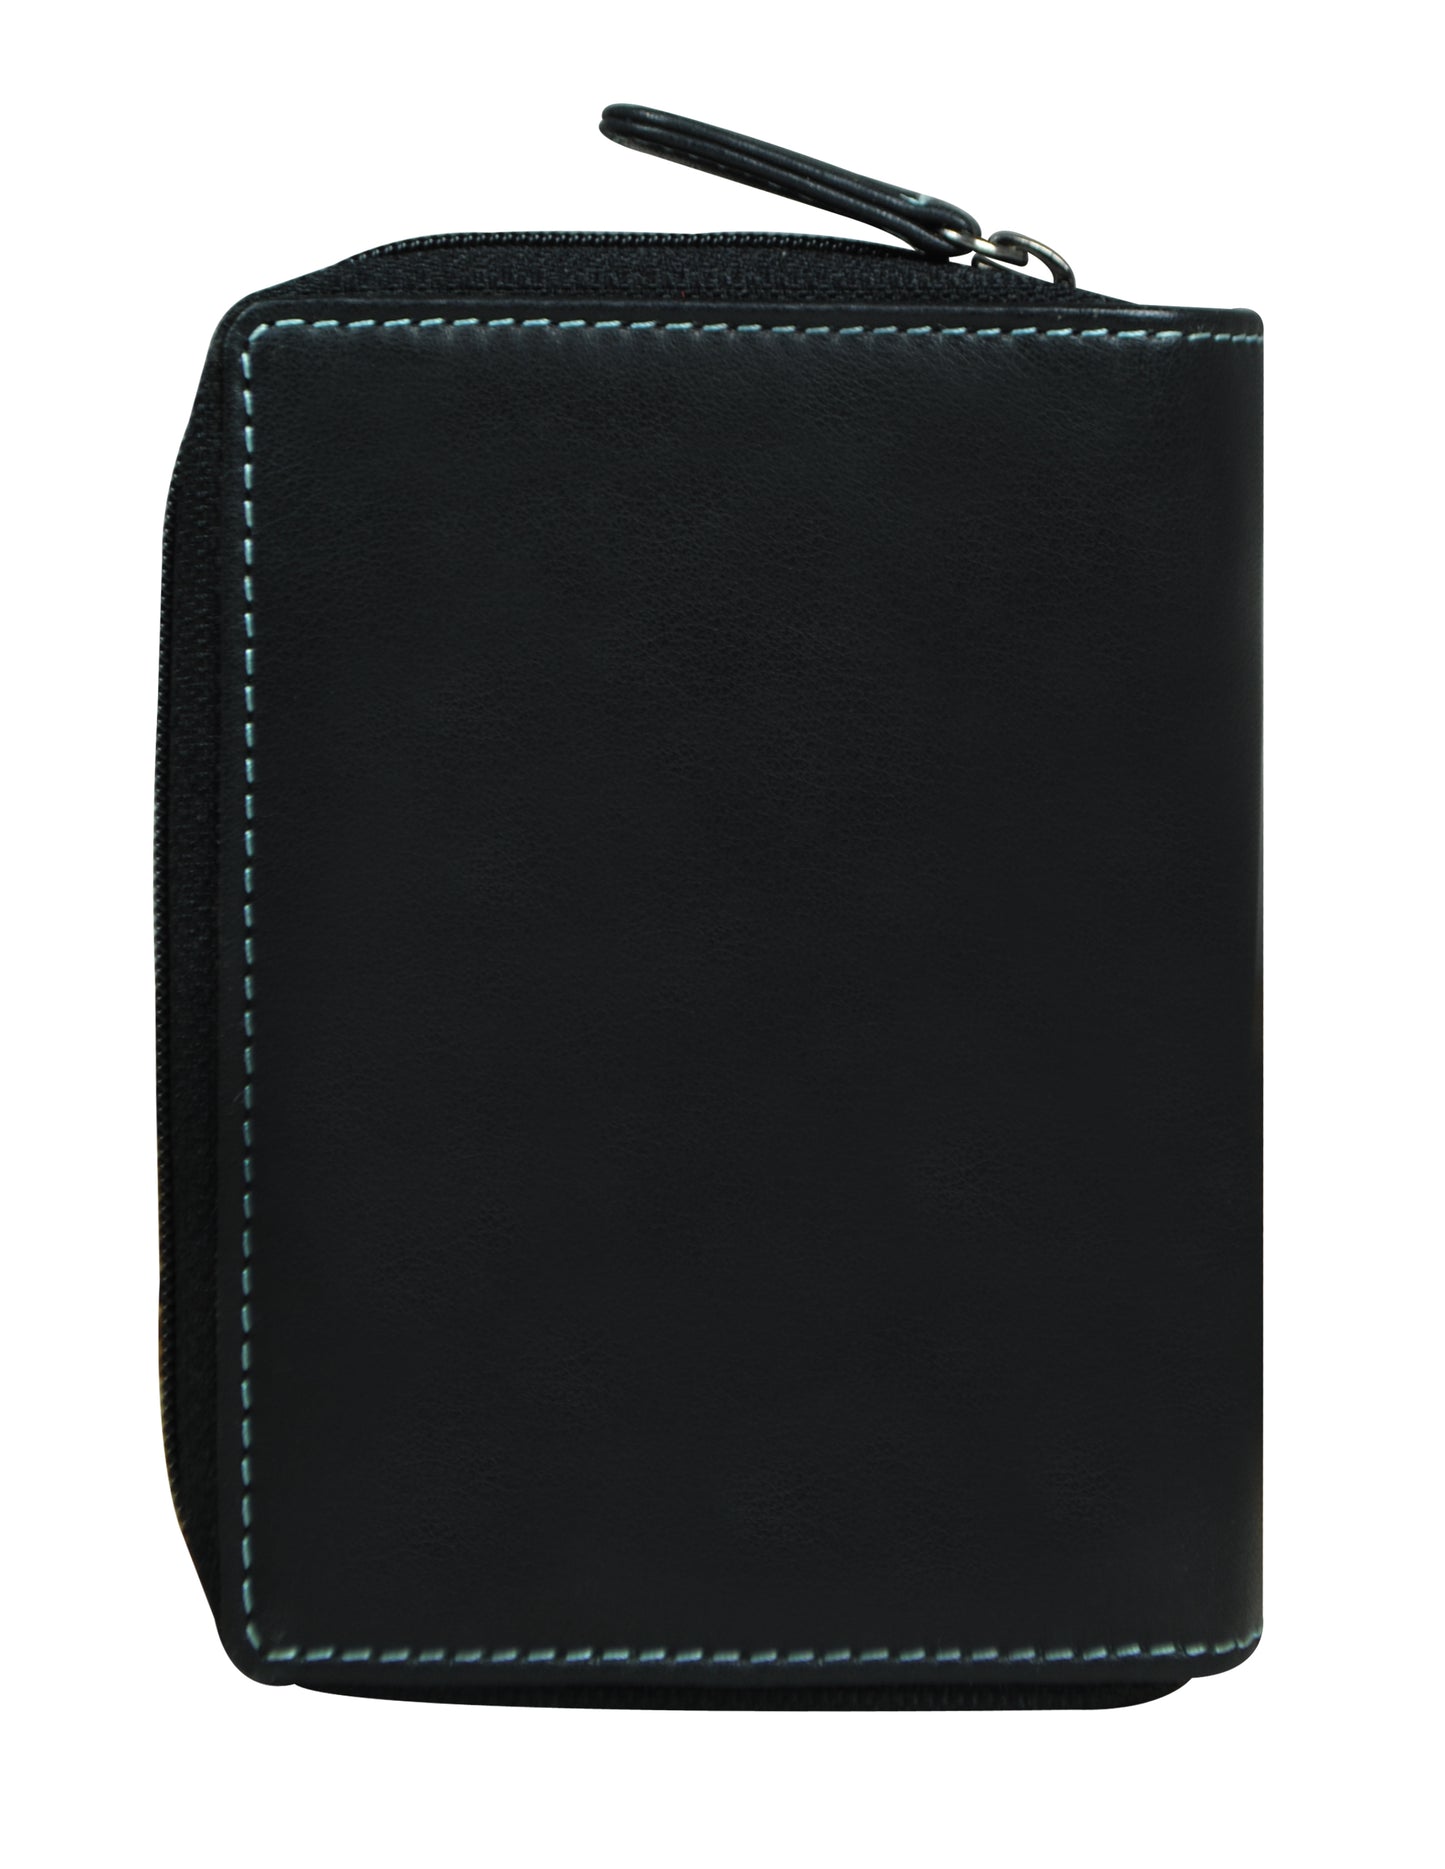 Calfnero Genuine Leather Women's Wallet (AK-81-Black-Red)